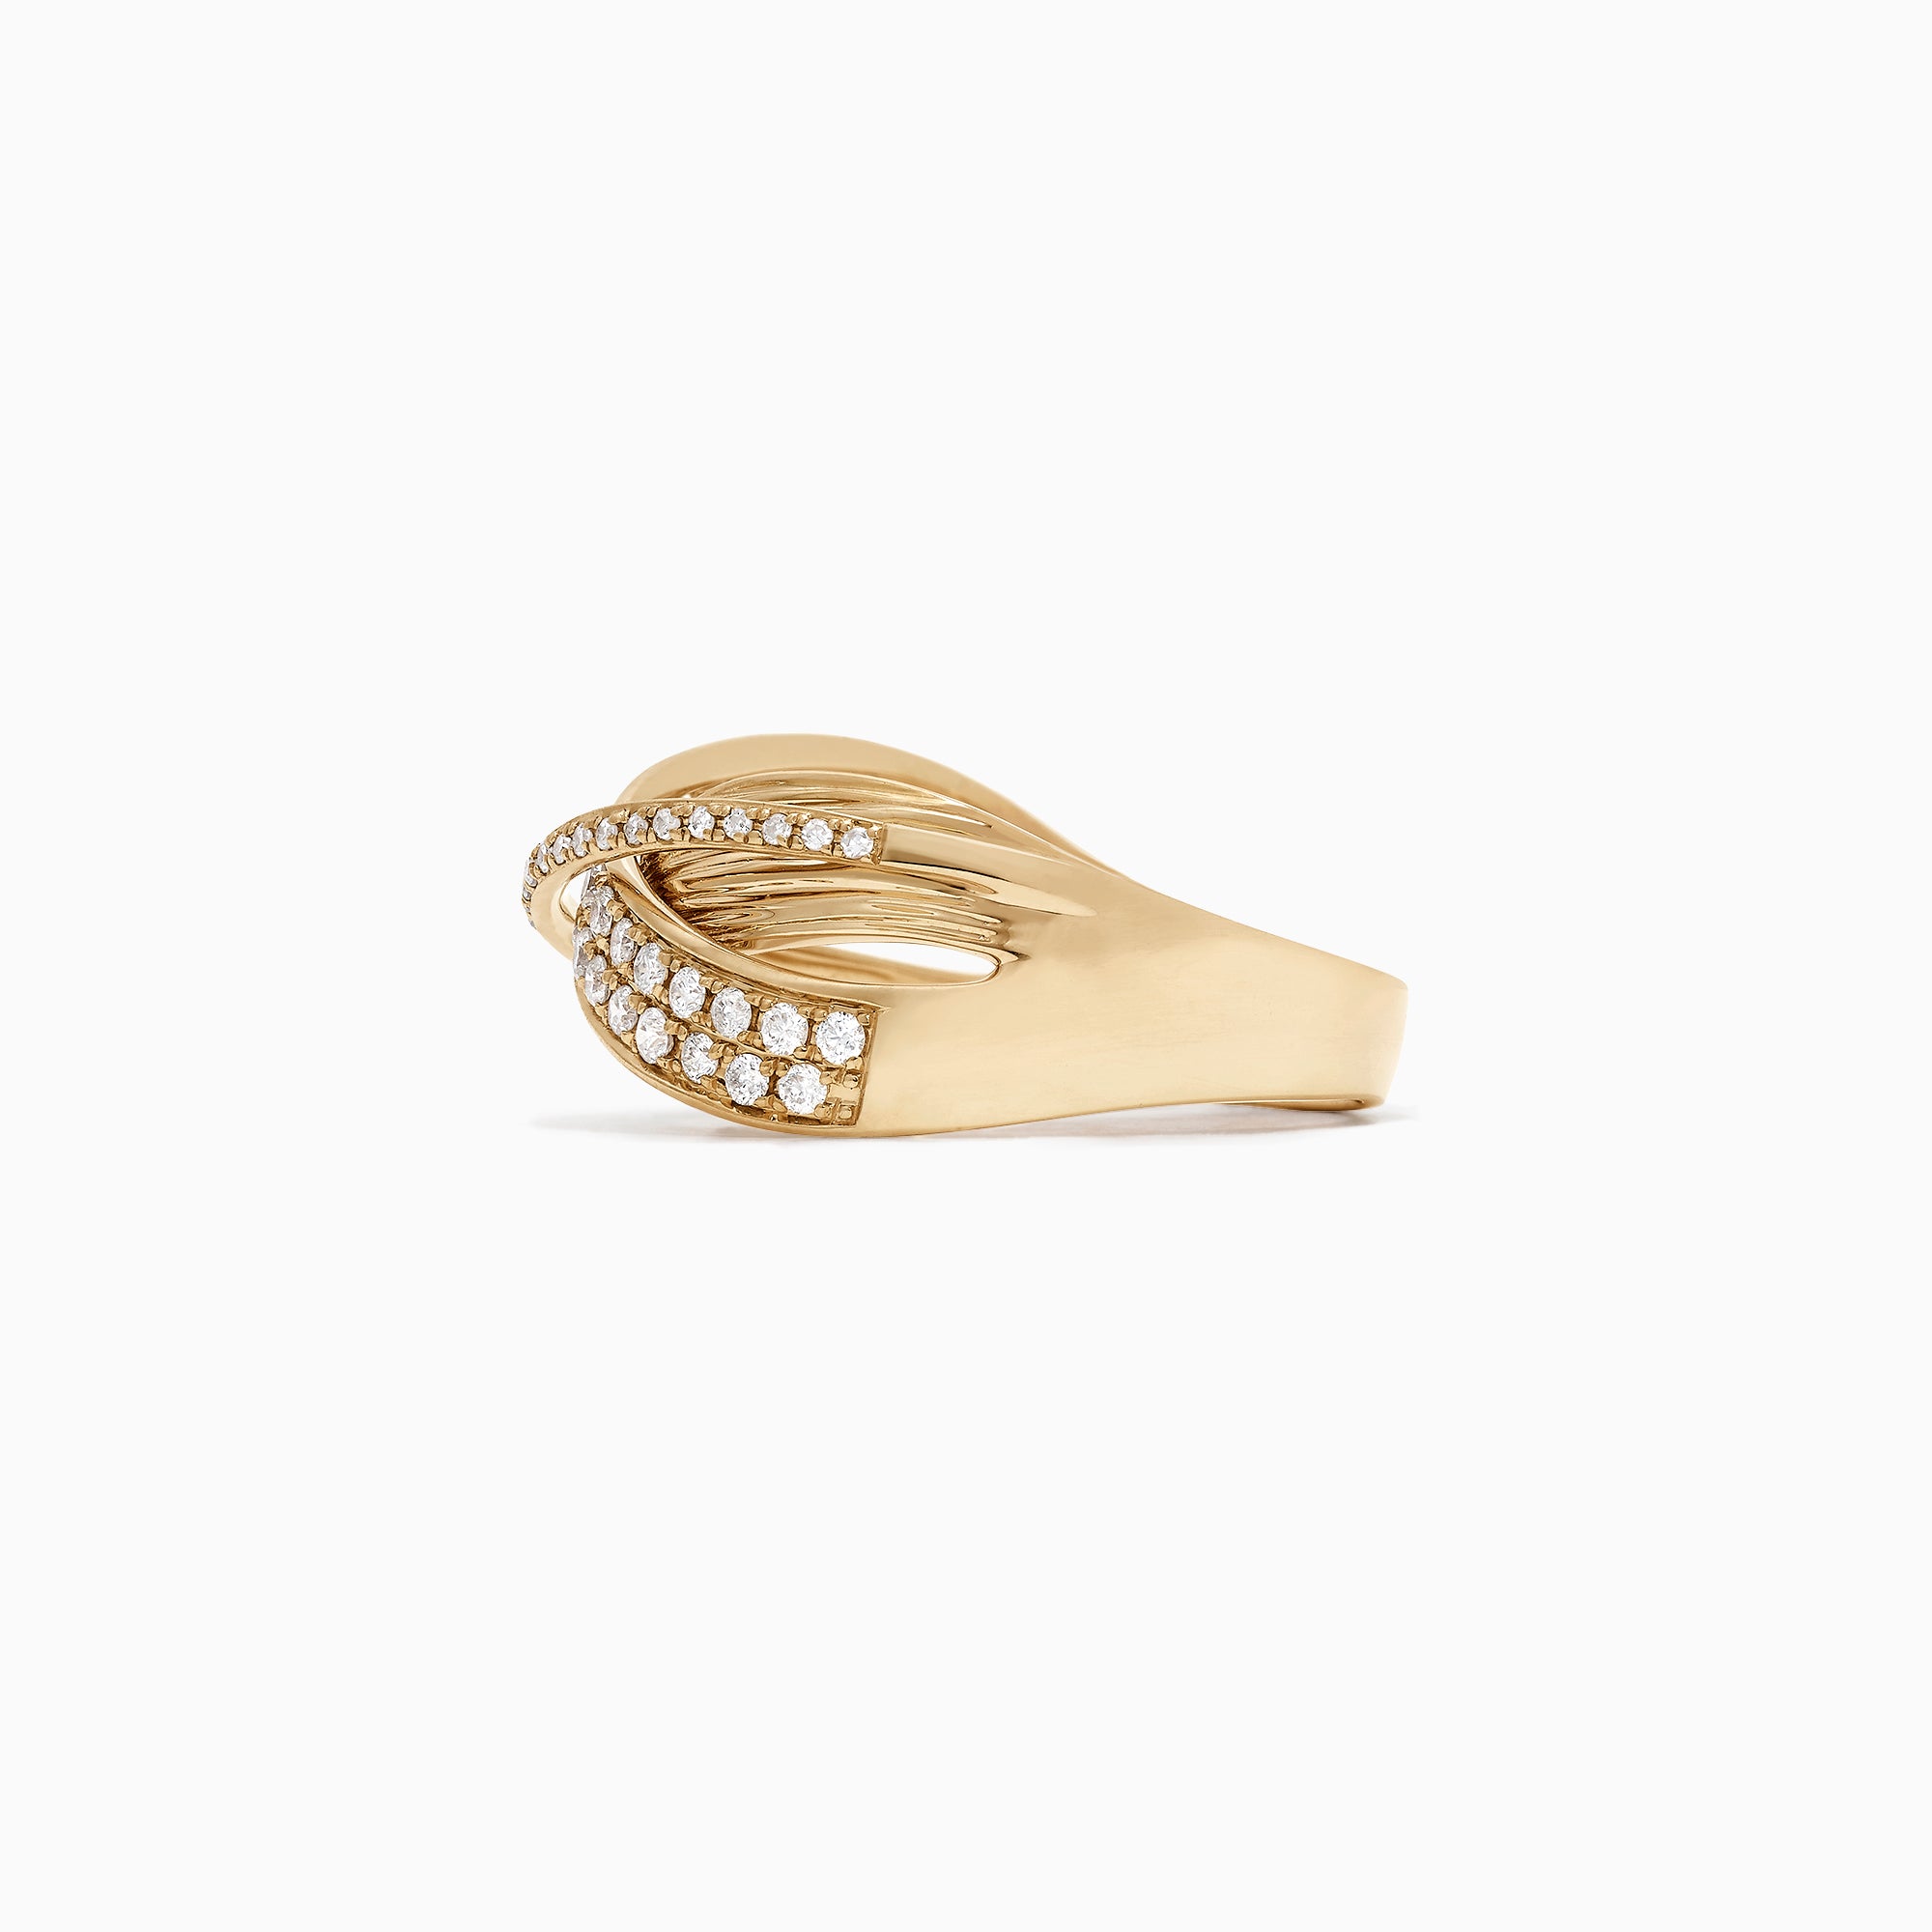 Effy D'Oro 14K Yellow Gold Diamond Ring Crossover, 0.46 TCW